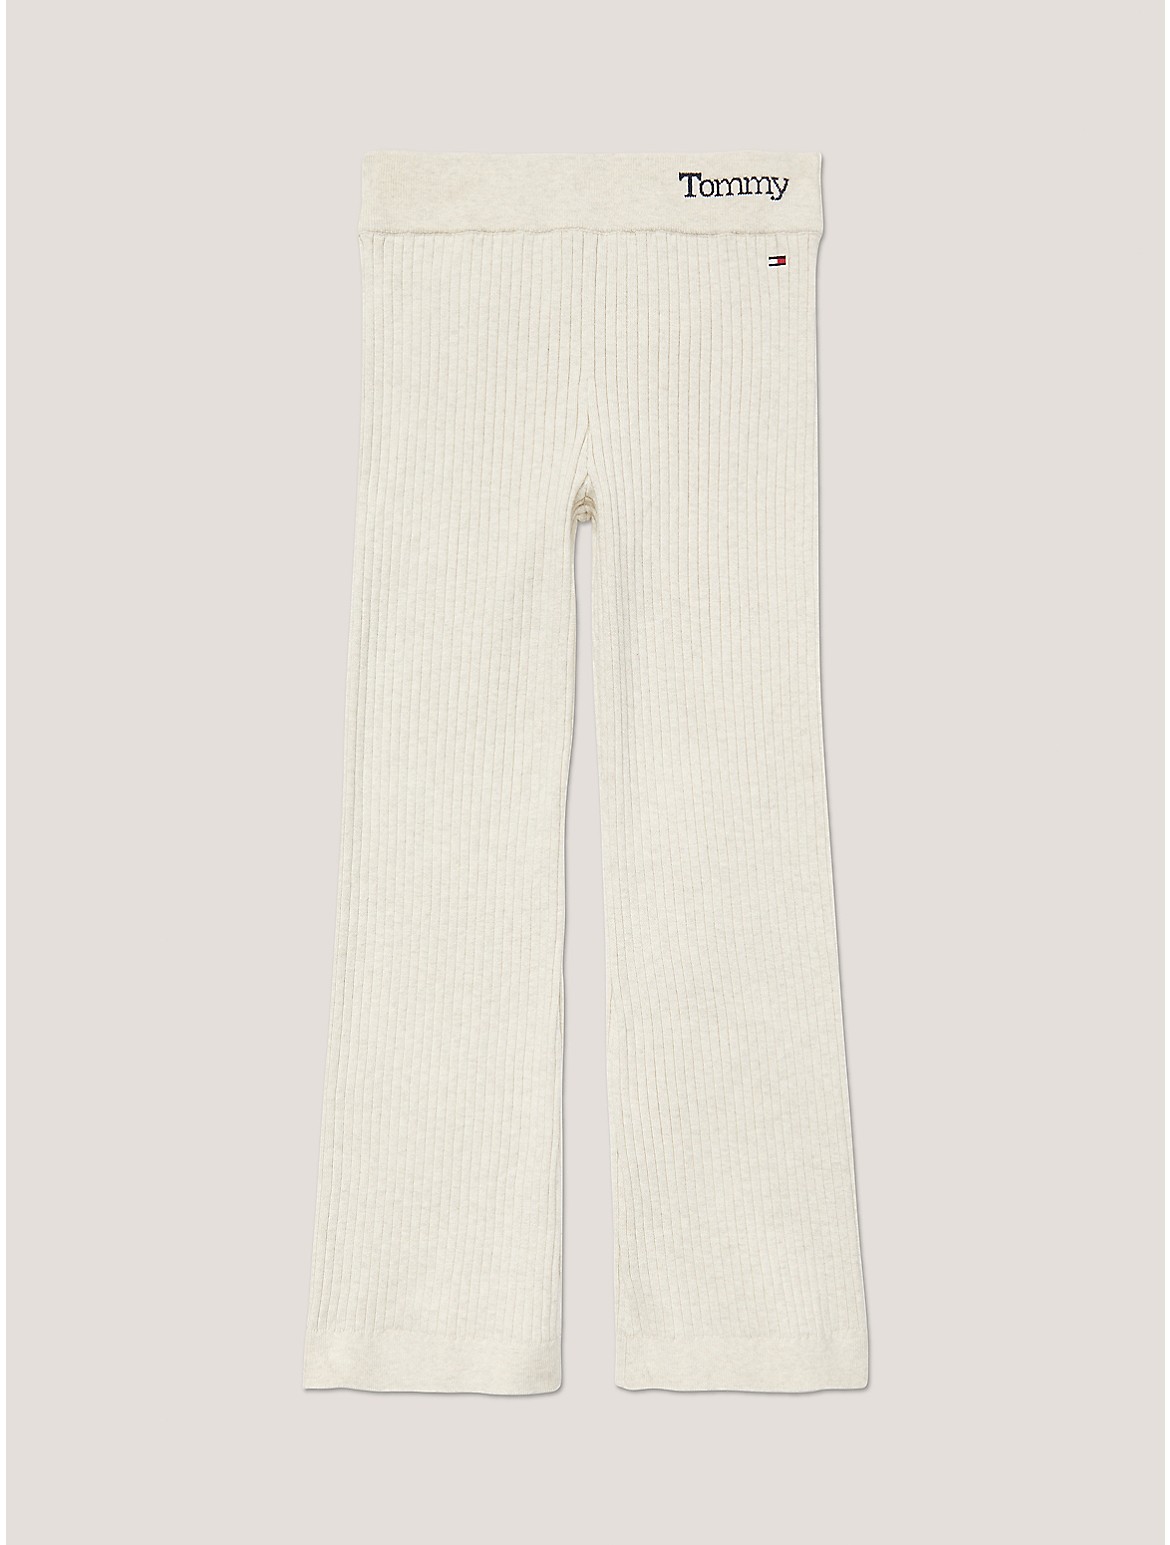 Tommy Hilfiger Girls' Kids' Ribbed Knit Pant